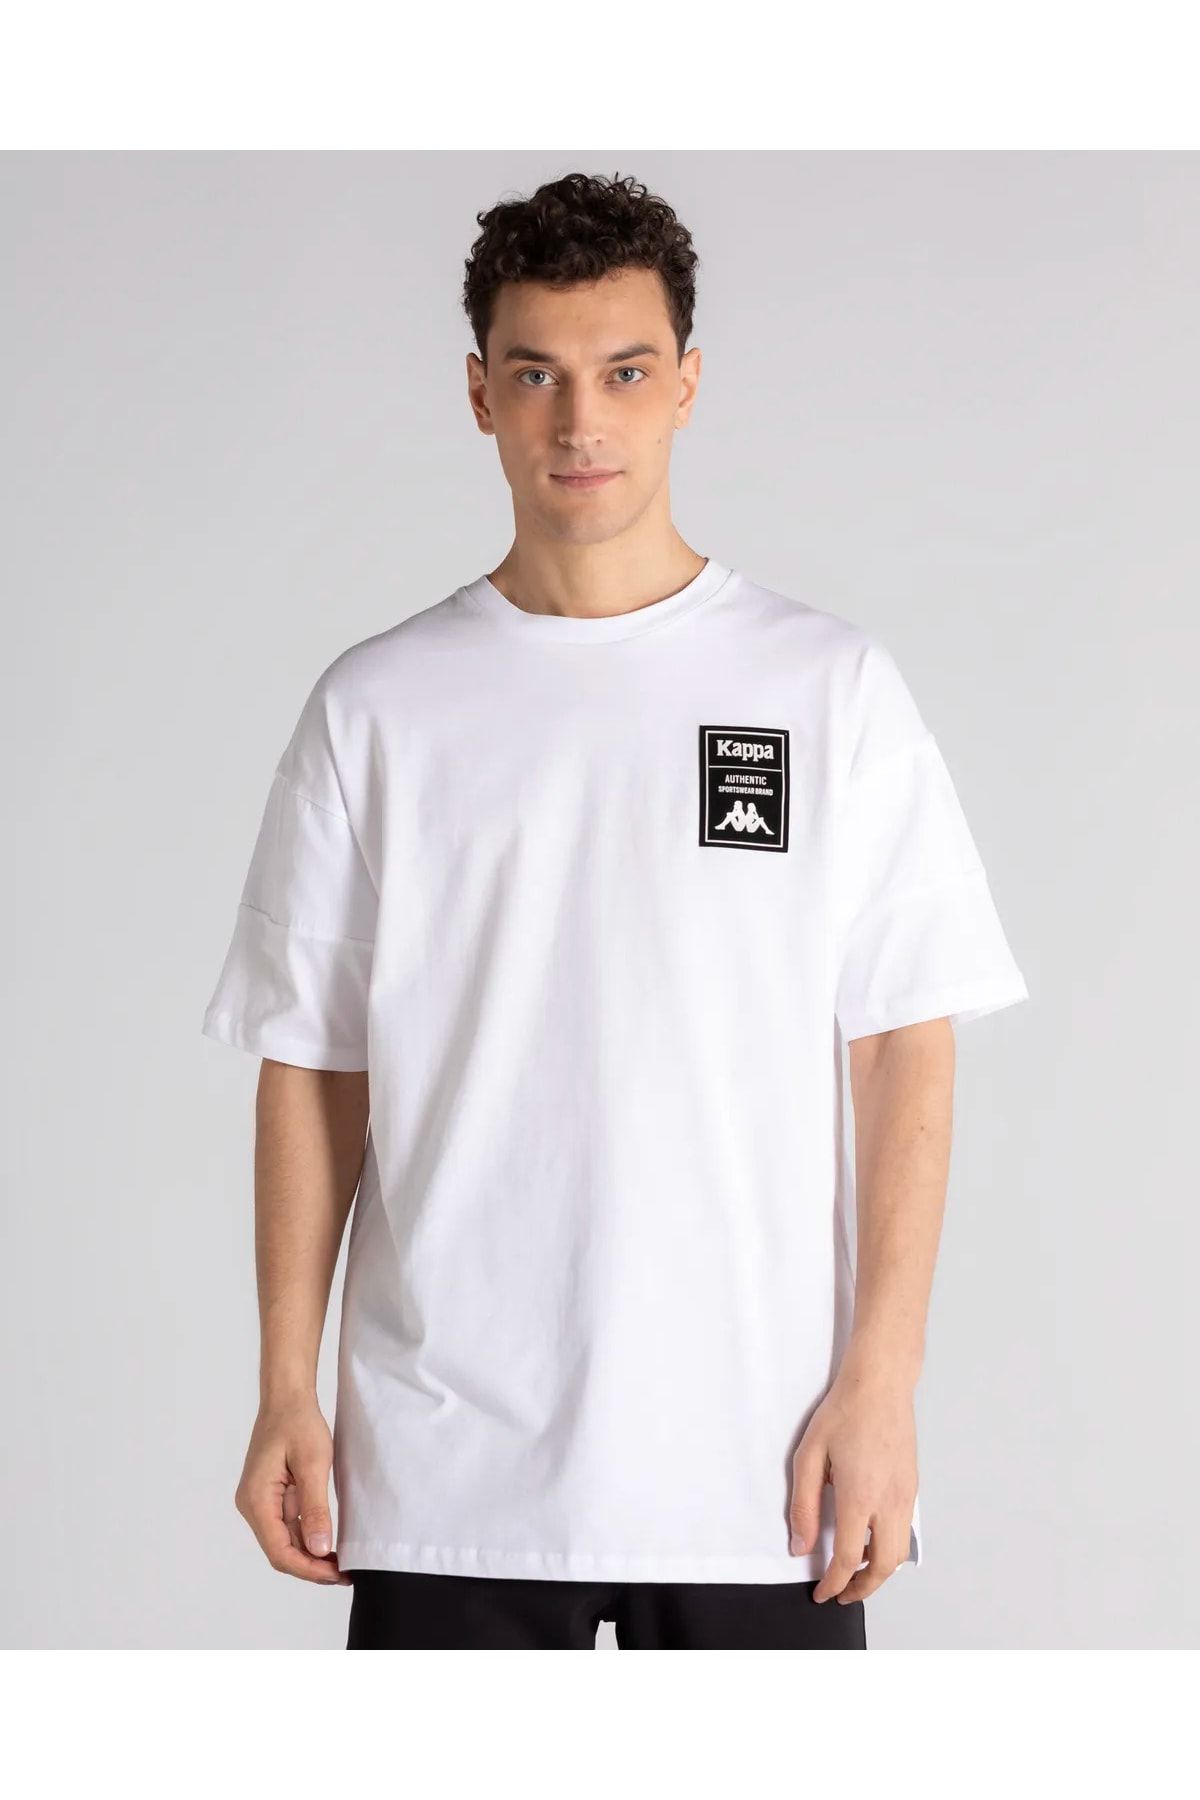 Kappa Authentıc Techvılek Tk Men's Crew Neck T-Shirt - White - Trendyol